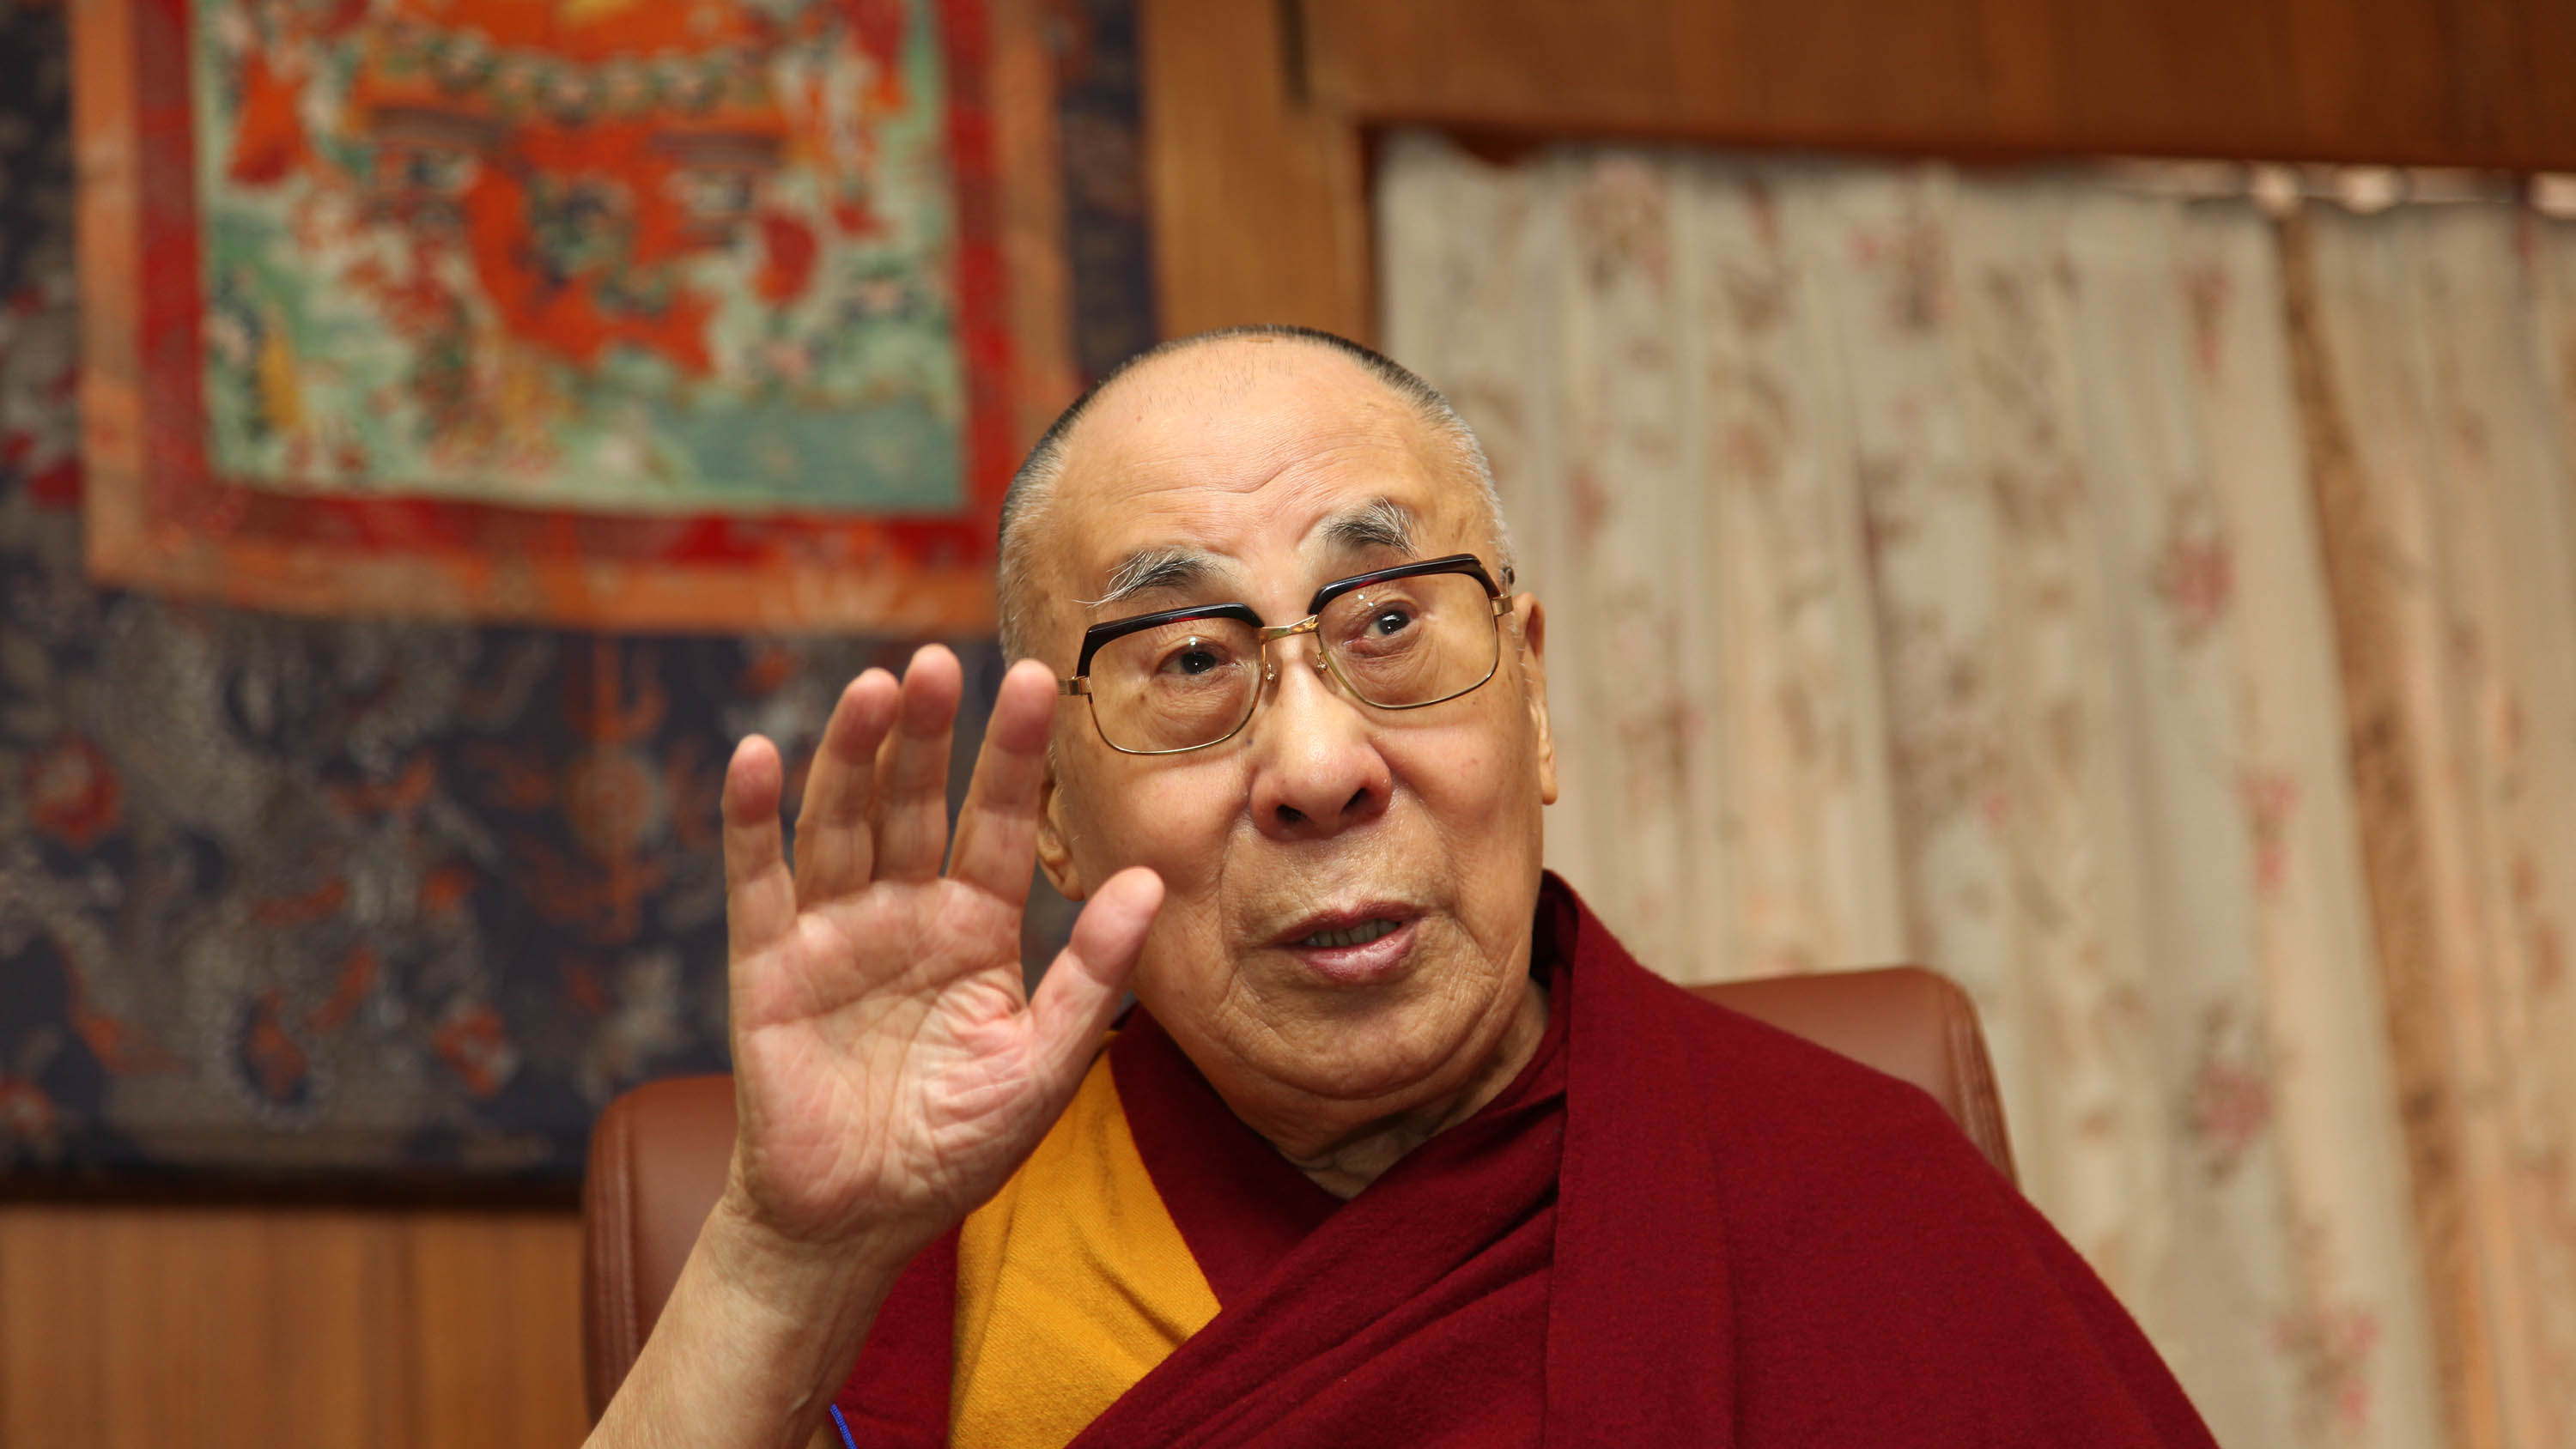 The Dalai Lama speaks in Dharamshala, India, in March 2019.